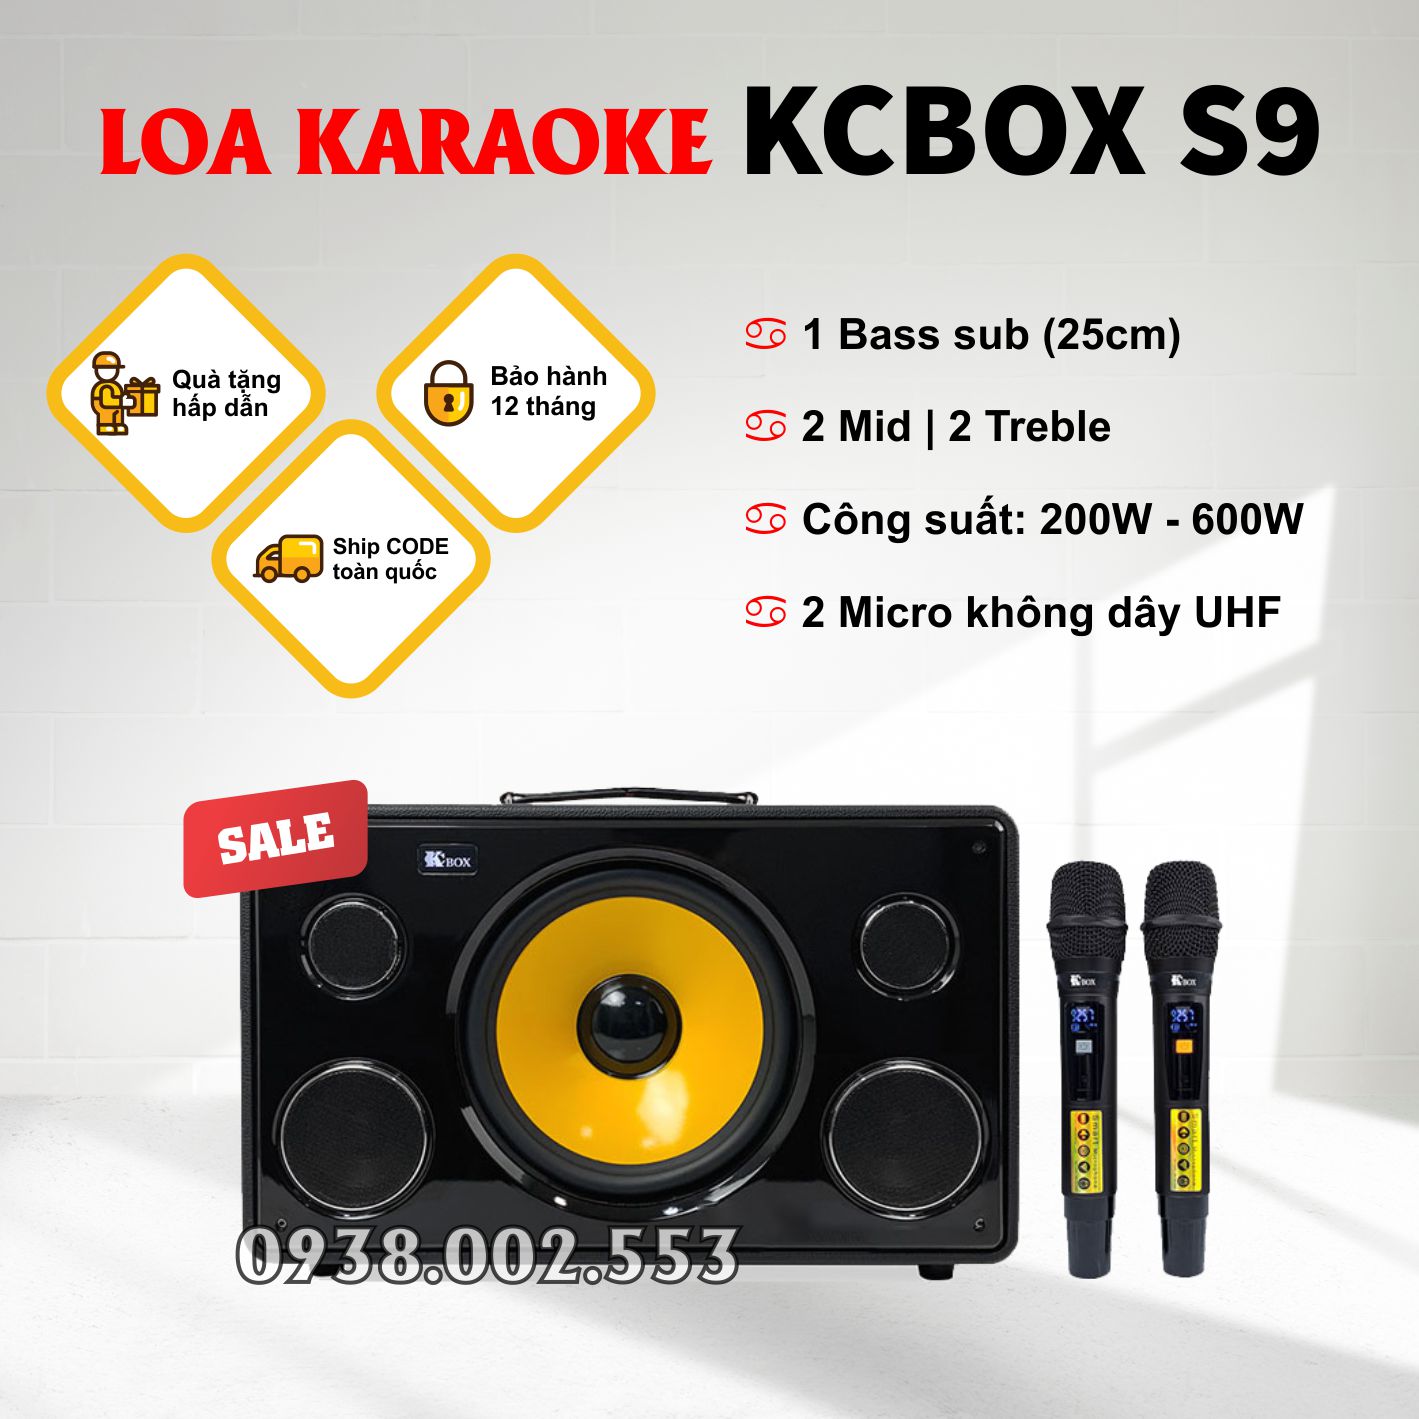 loa-karaoke-kcbox-s9-xach-tay-CHINH-HANG-sdt.jpg